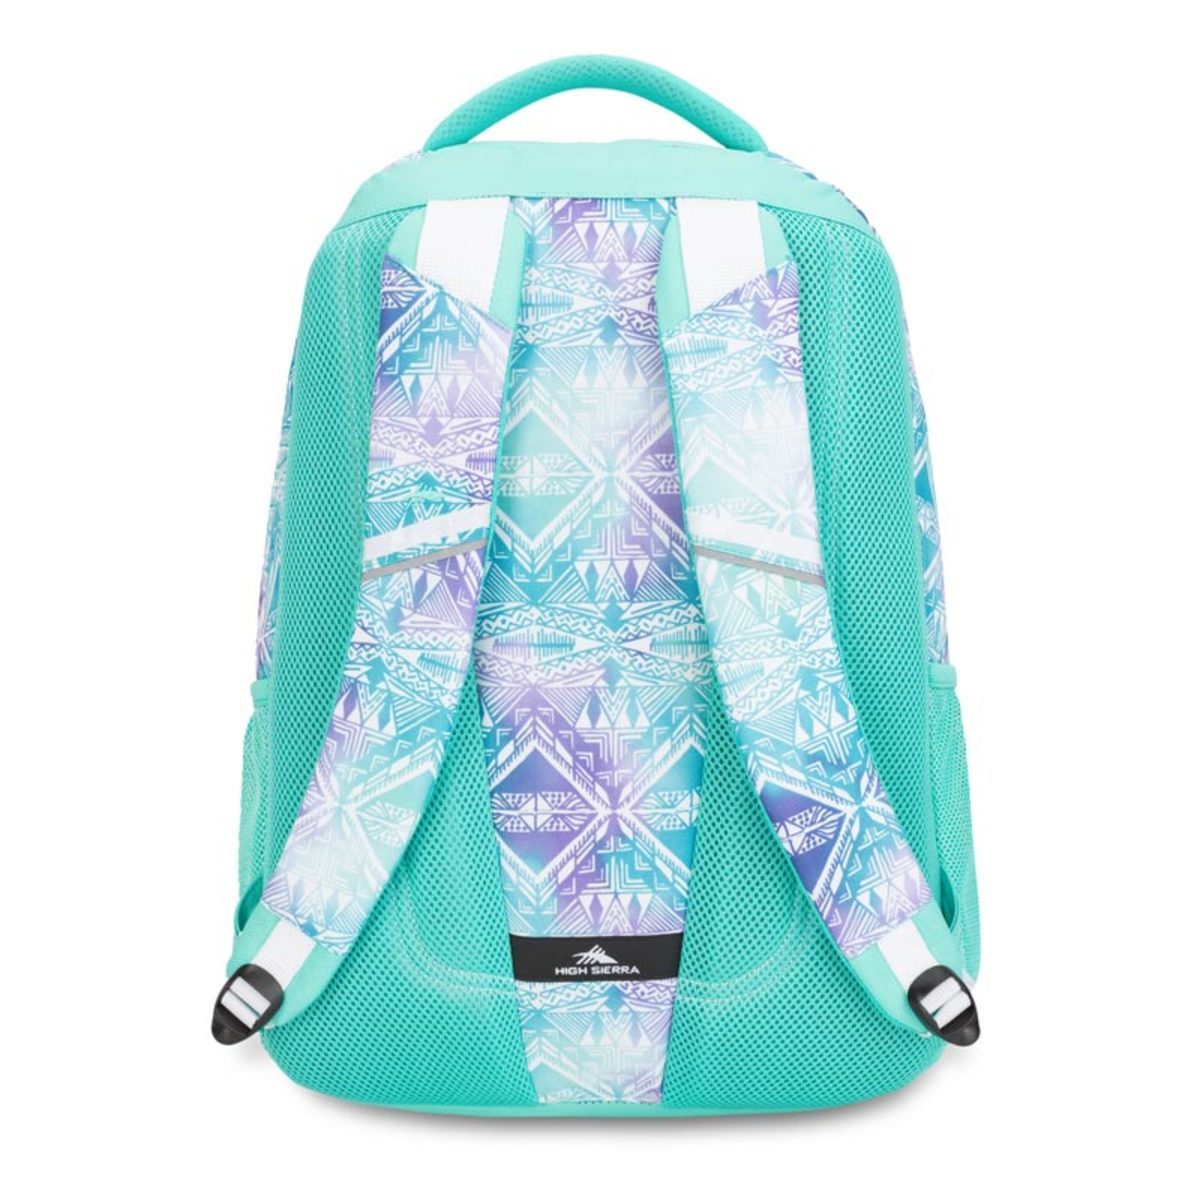 High Sierra RipRap Everyday Backpack in Aqua